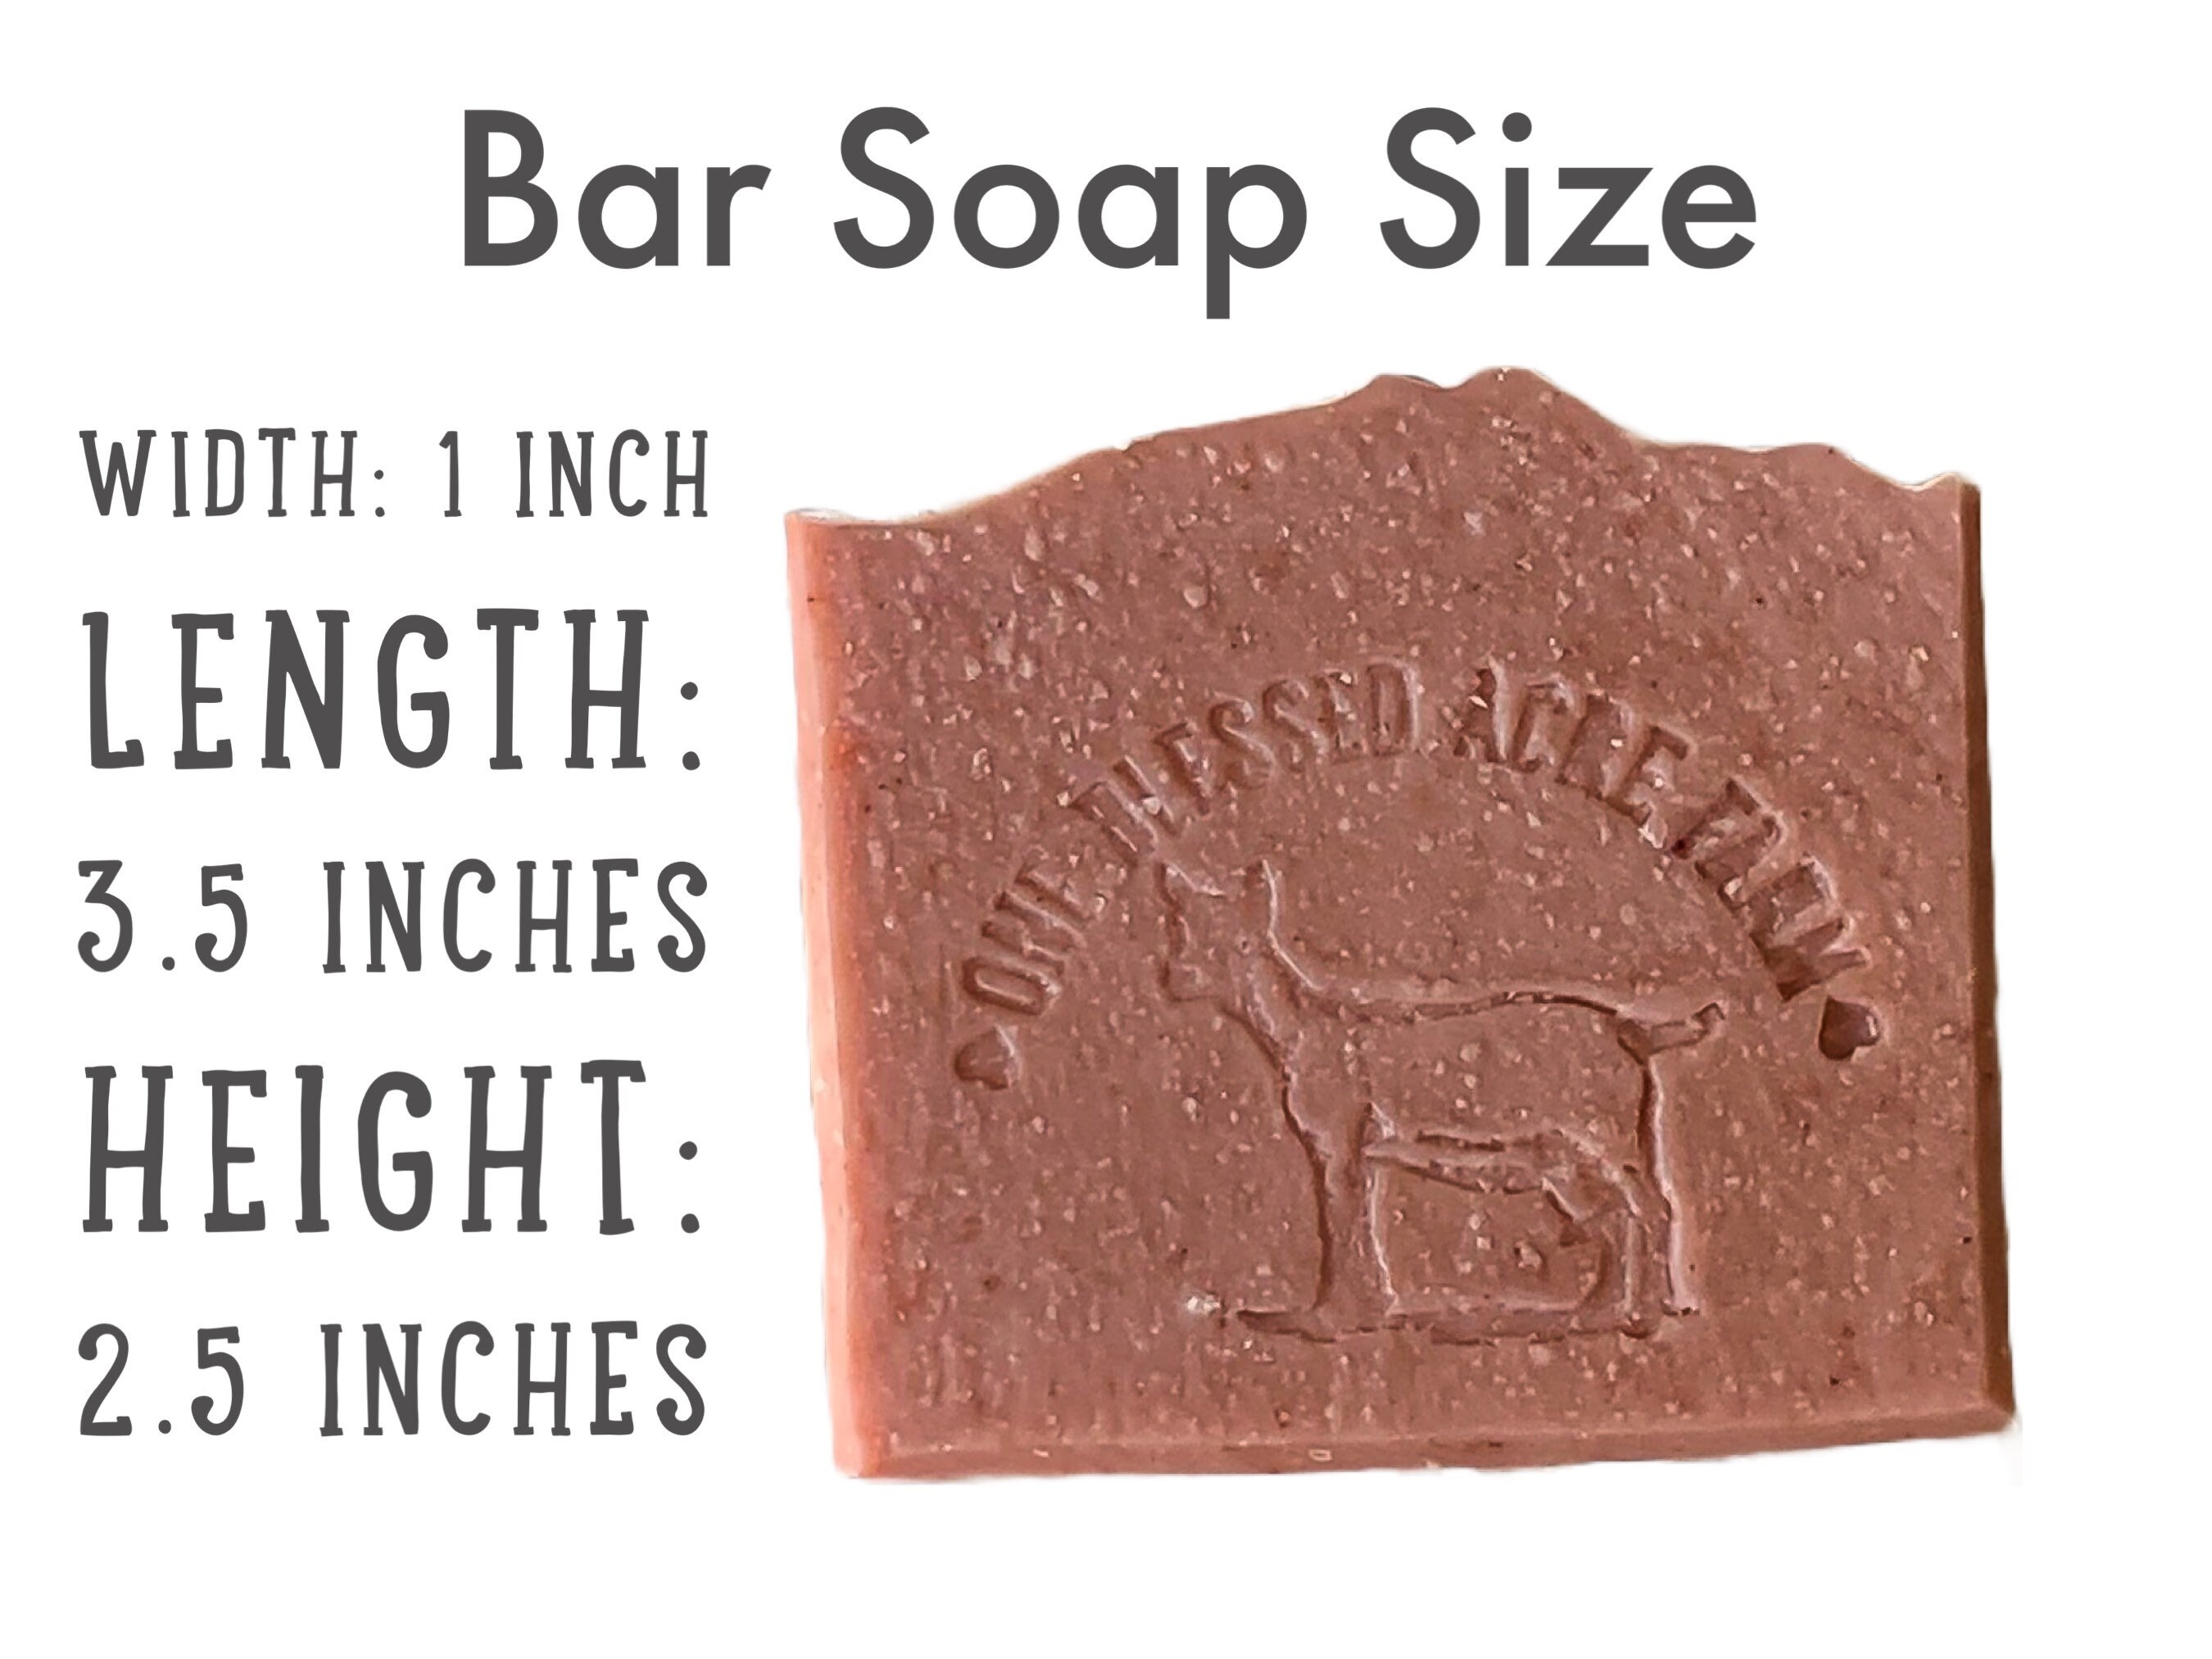 Maverick Goat Milk Soap Bar Men Body Soap Eczema Soap for Men Soap